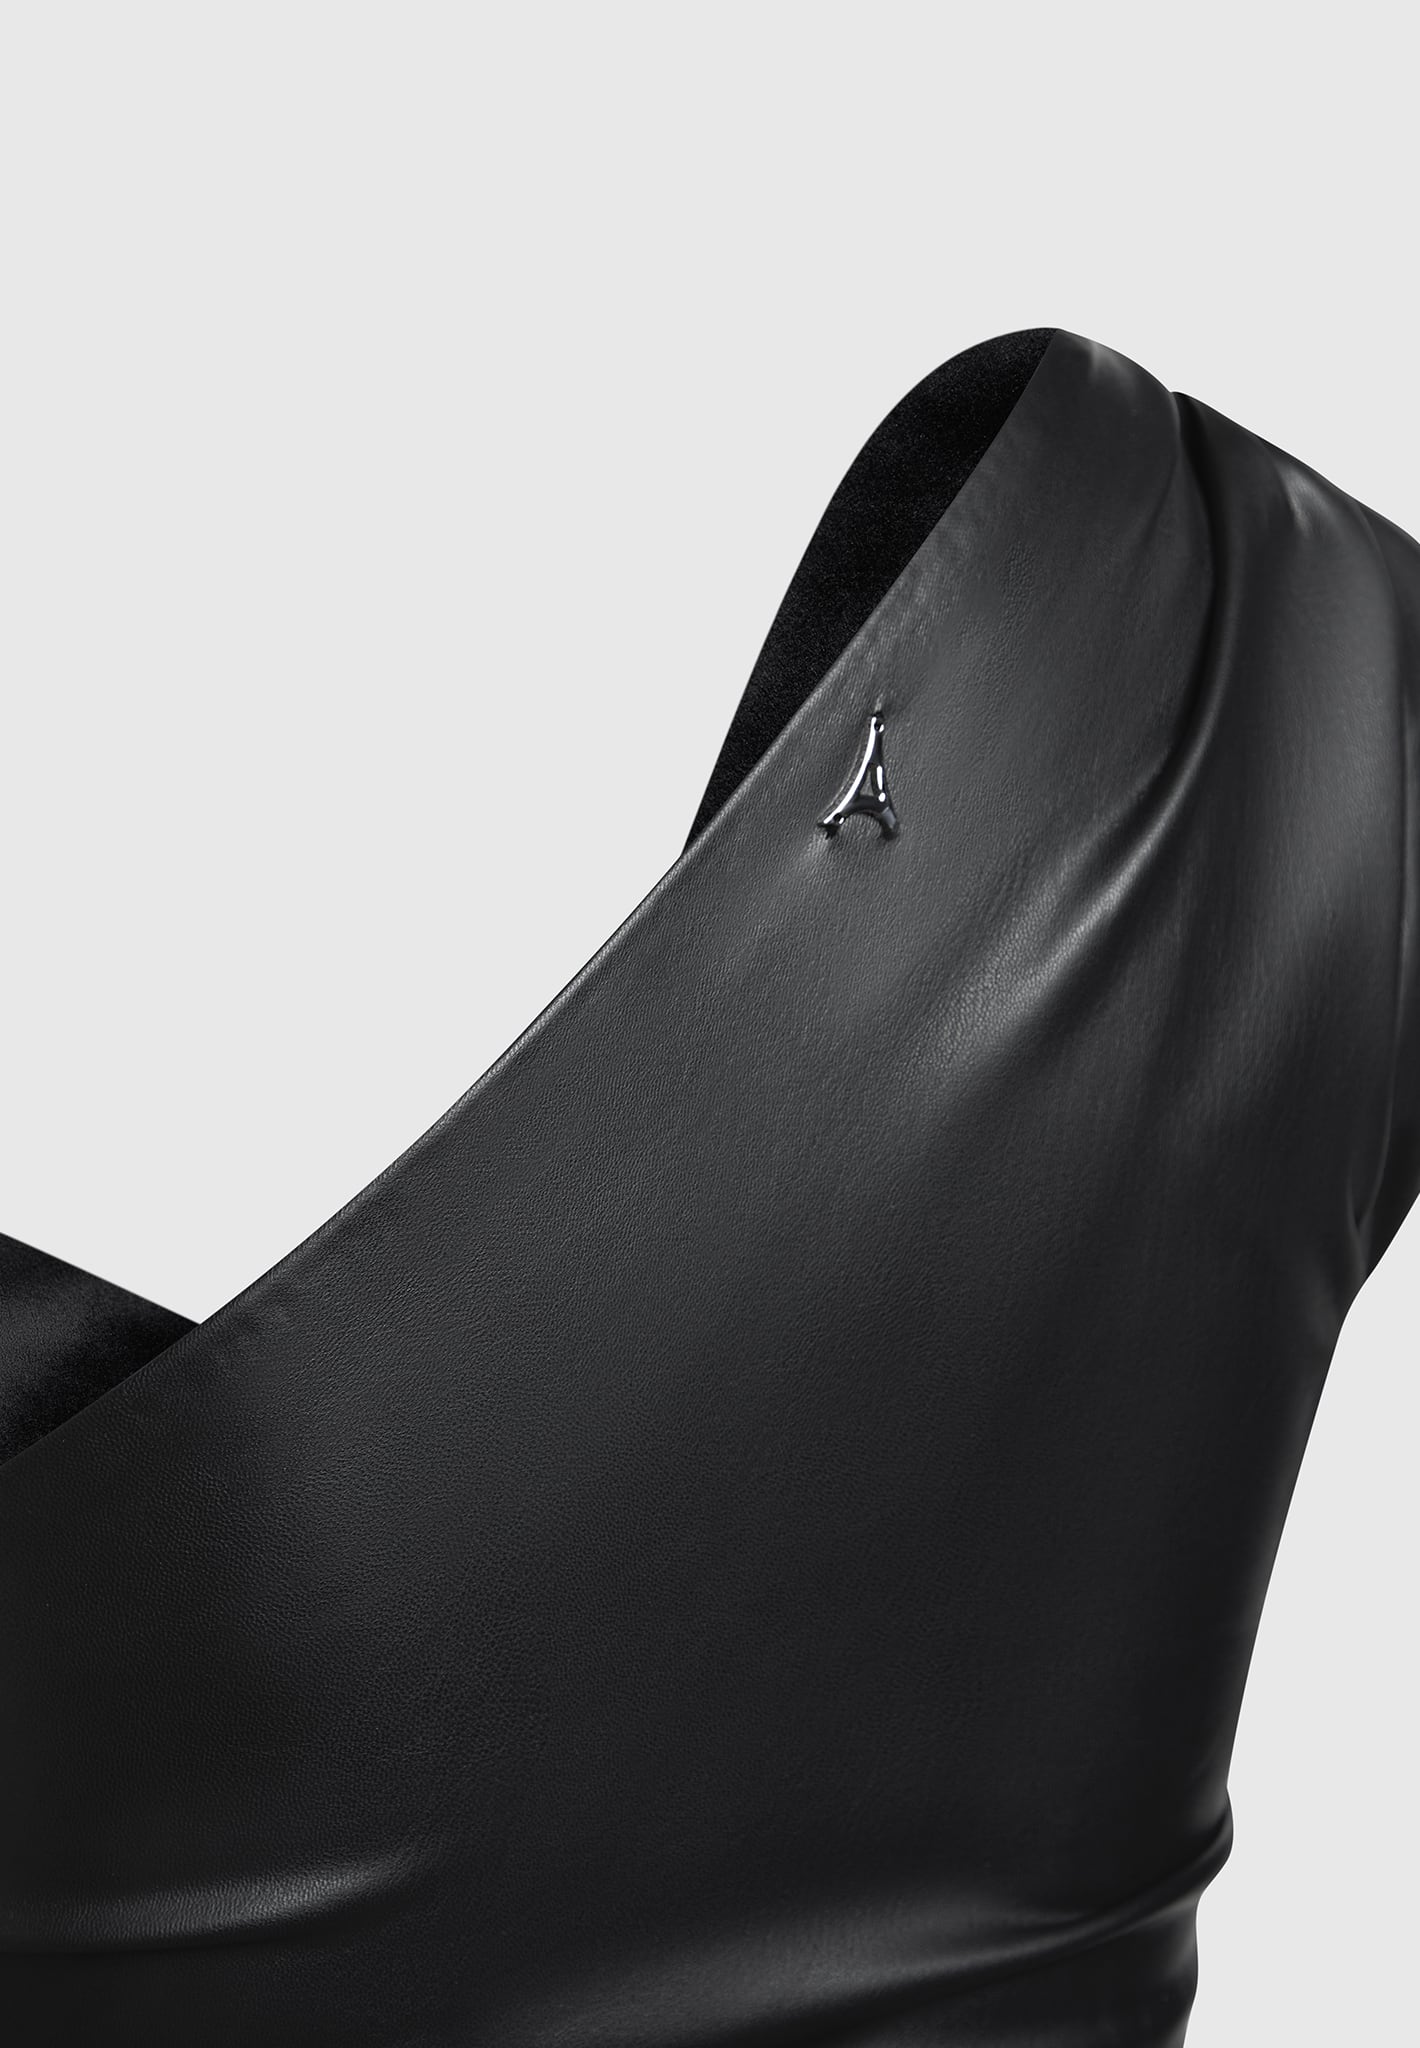 vegan-leather-gathered-bodysuit-with-sleeves-black